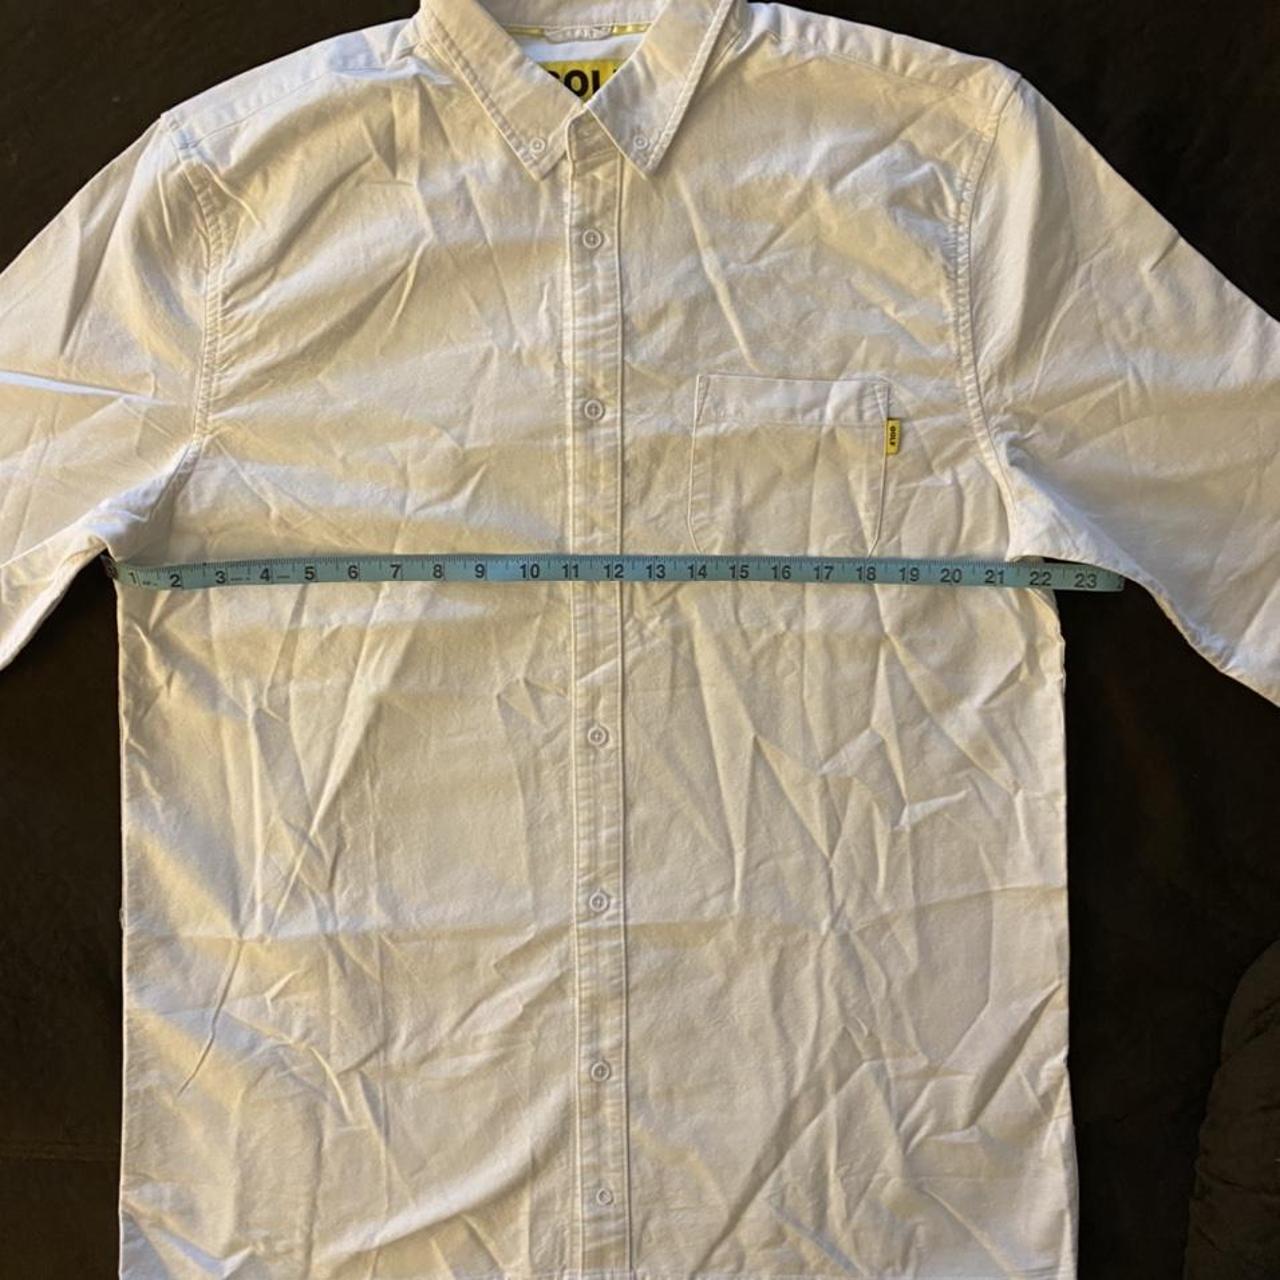 Product Image 2 - Golf Wang white long sleeve